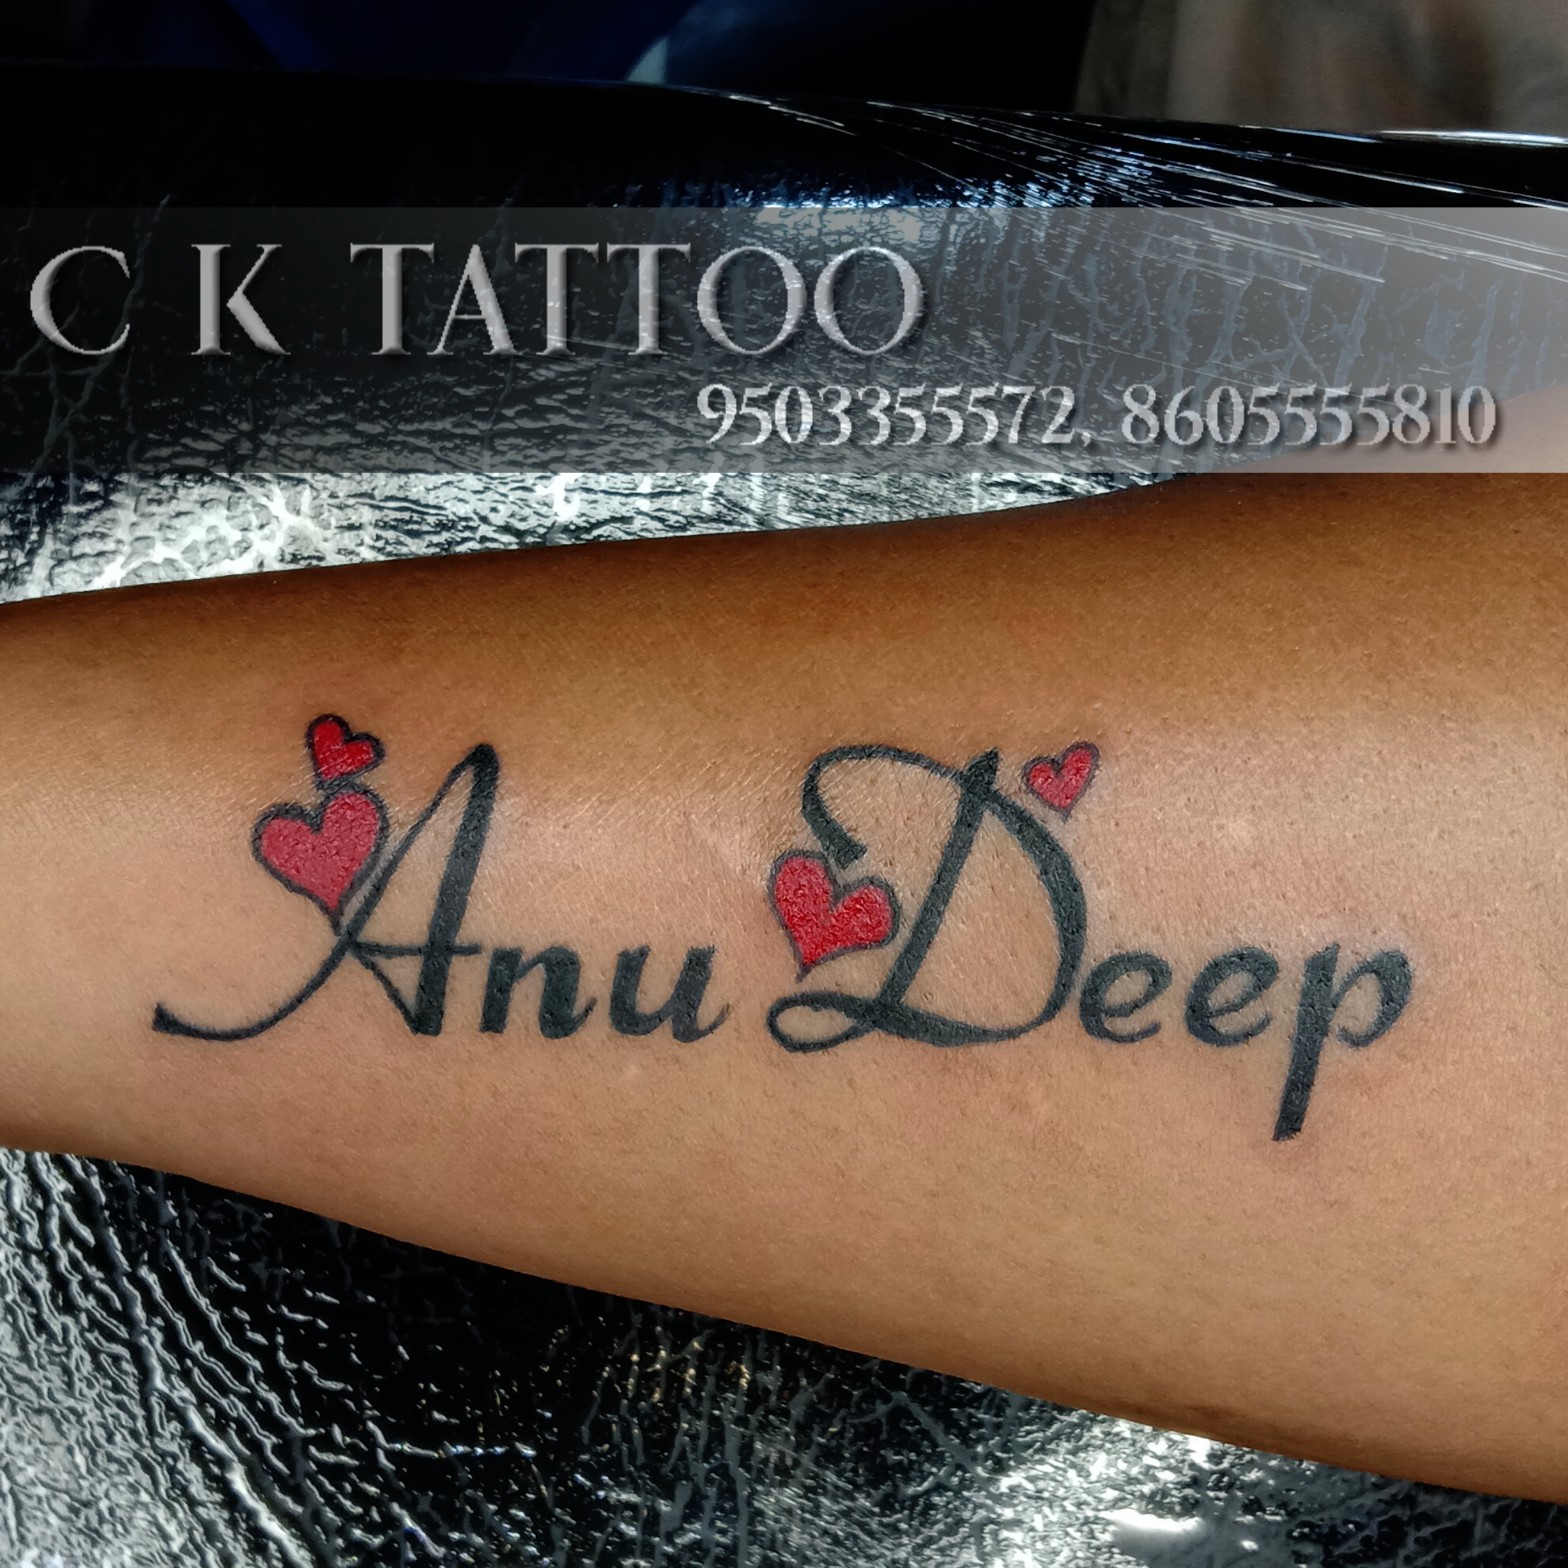 Anu name tattoo design  Anu name love tattoo design by Dream world   shorts  YouTube